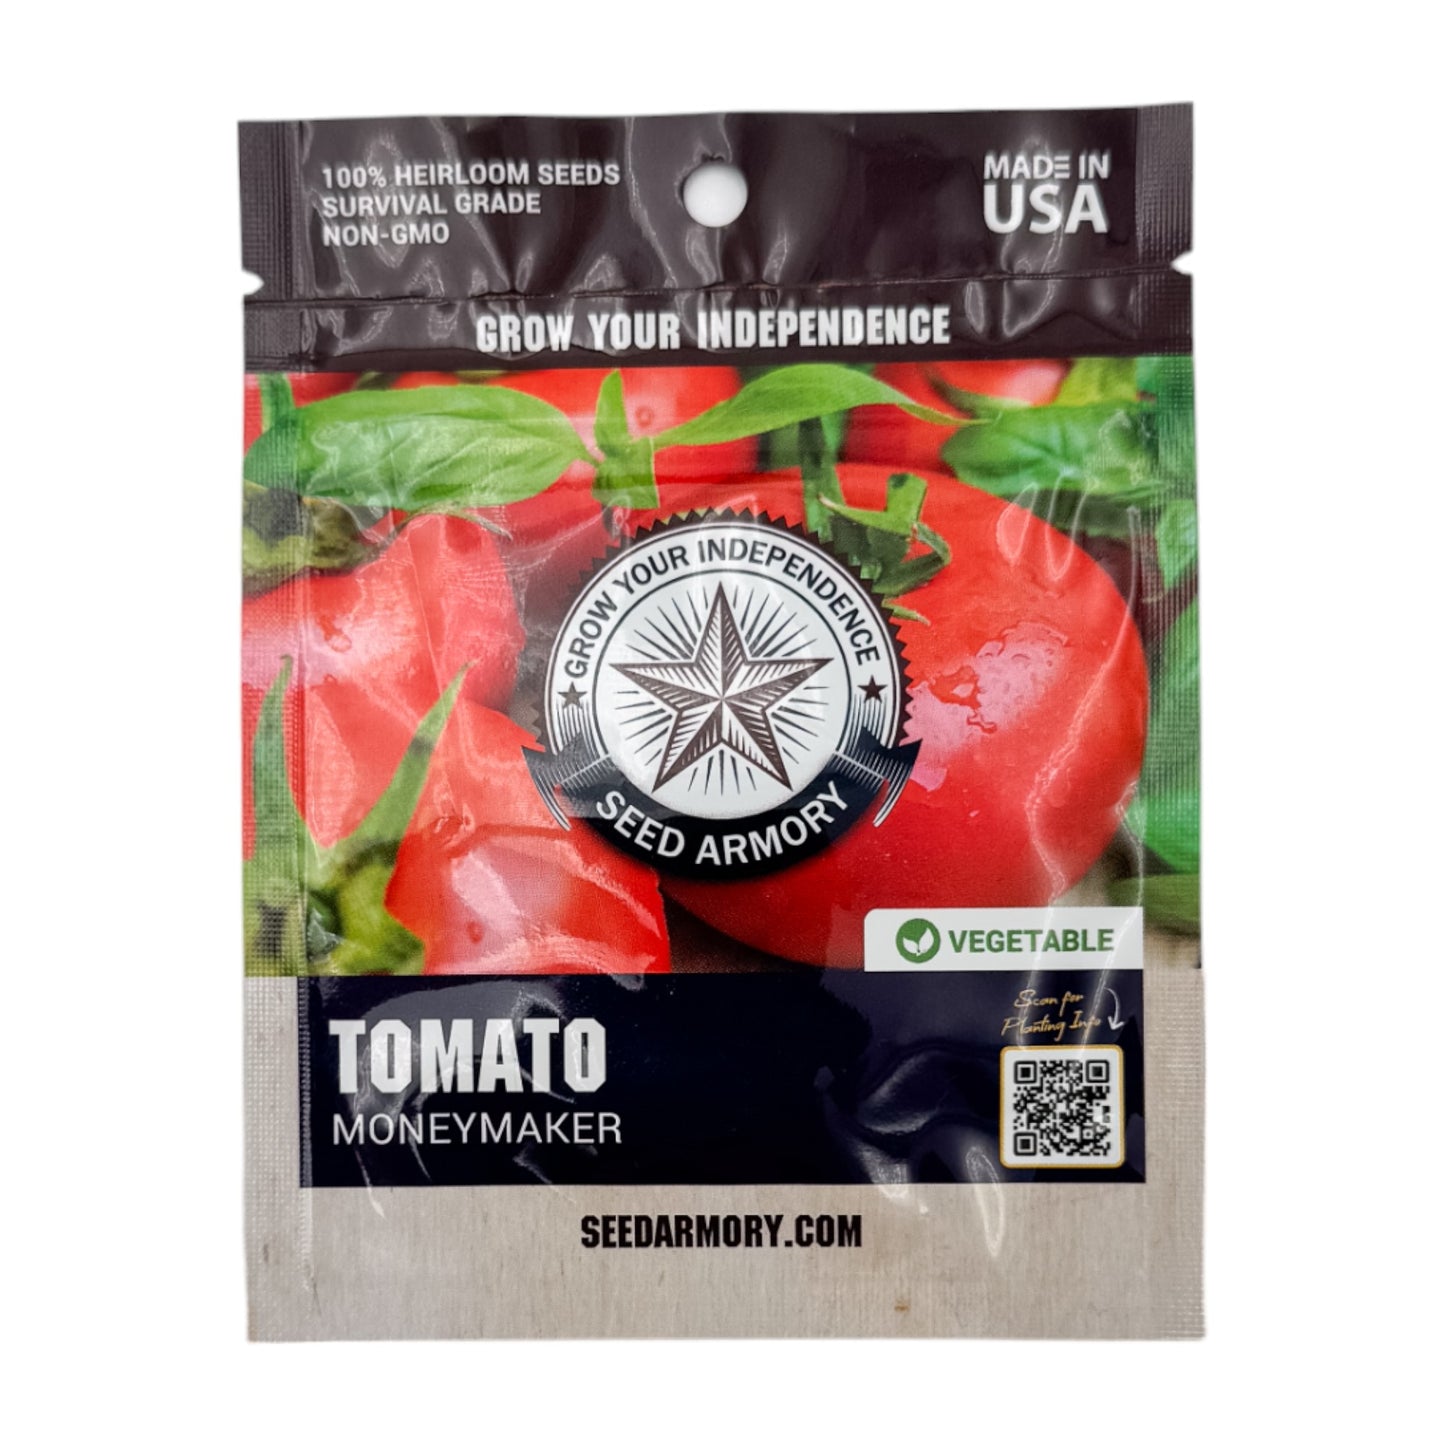 Tomato Heirloom Seeds - Moneymaker